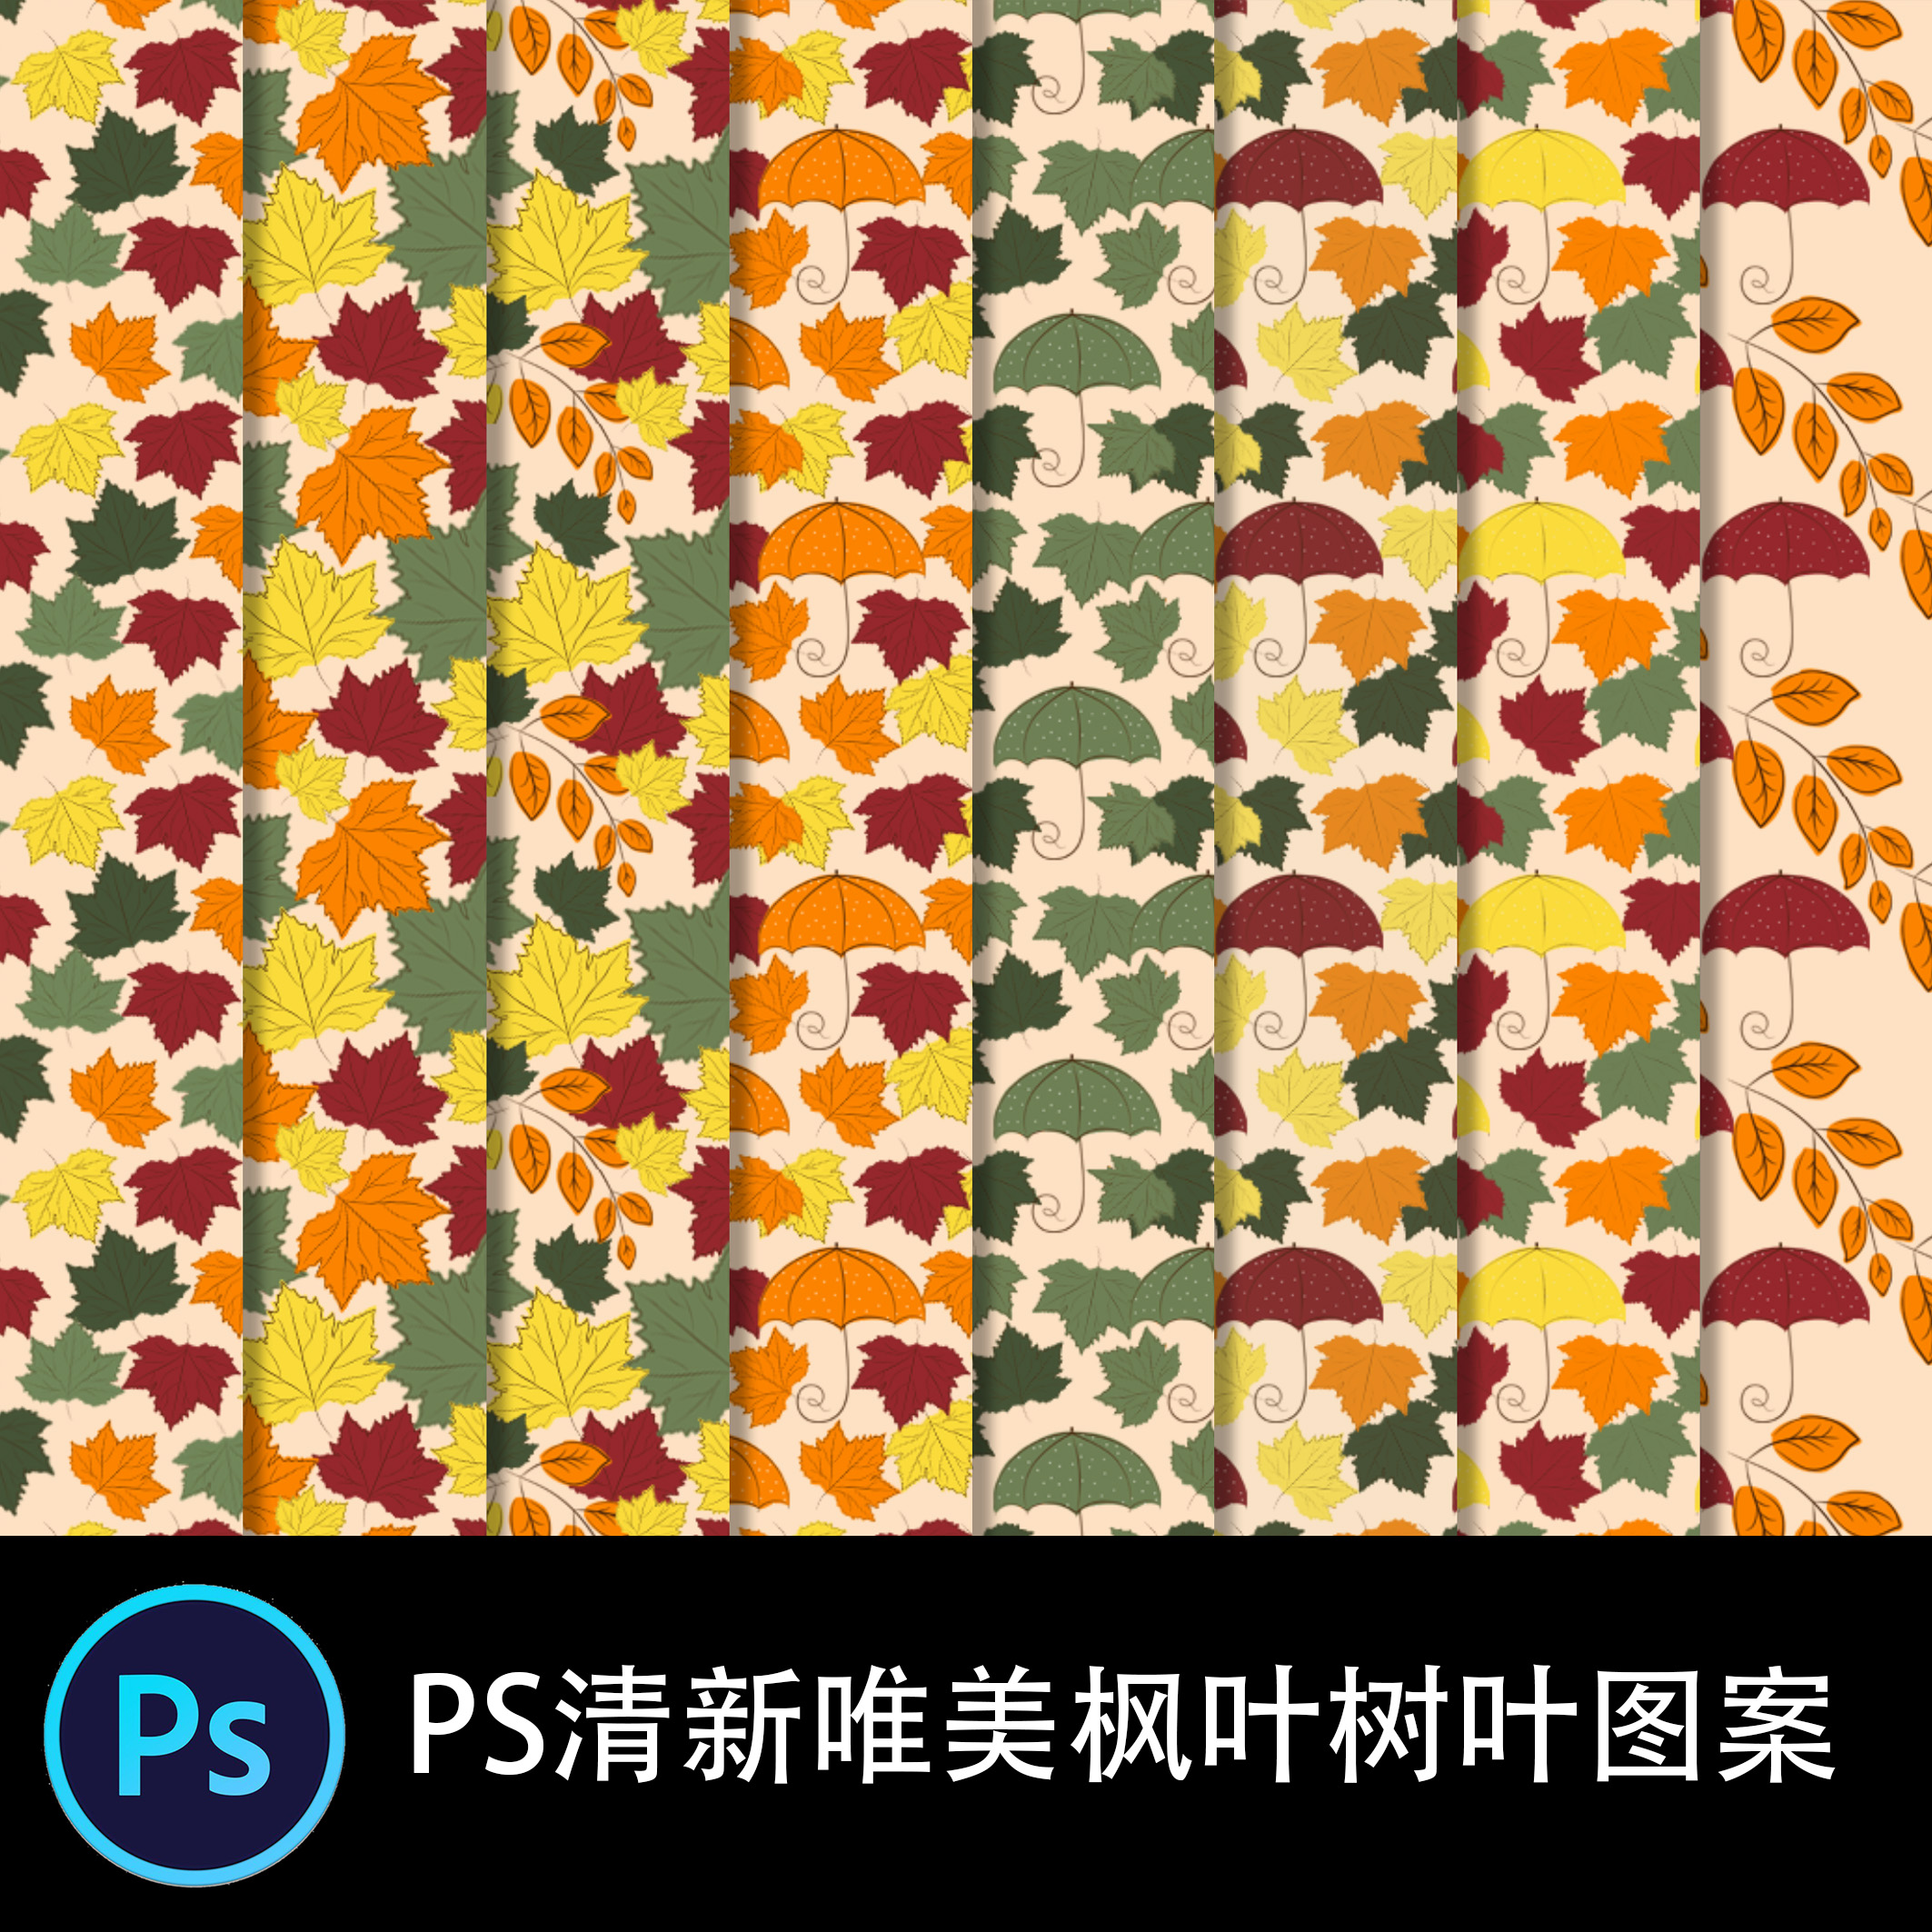 PS无缝图案 时尚唯美枫叶树叶壁纸PAT无缝填充印花贴图底纹素材